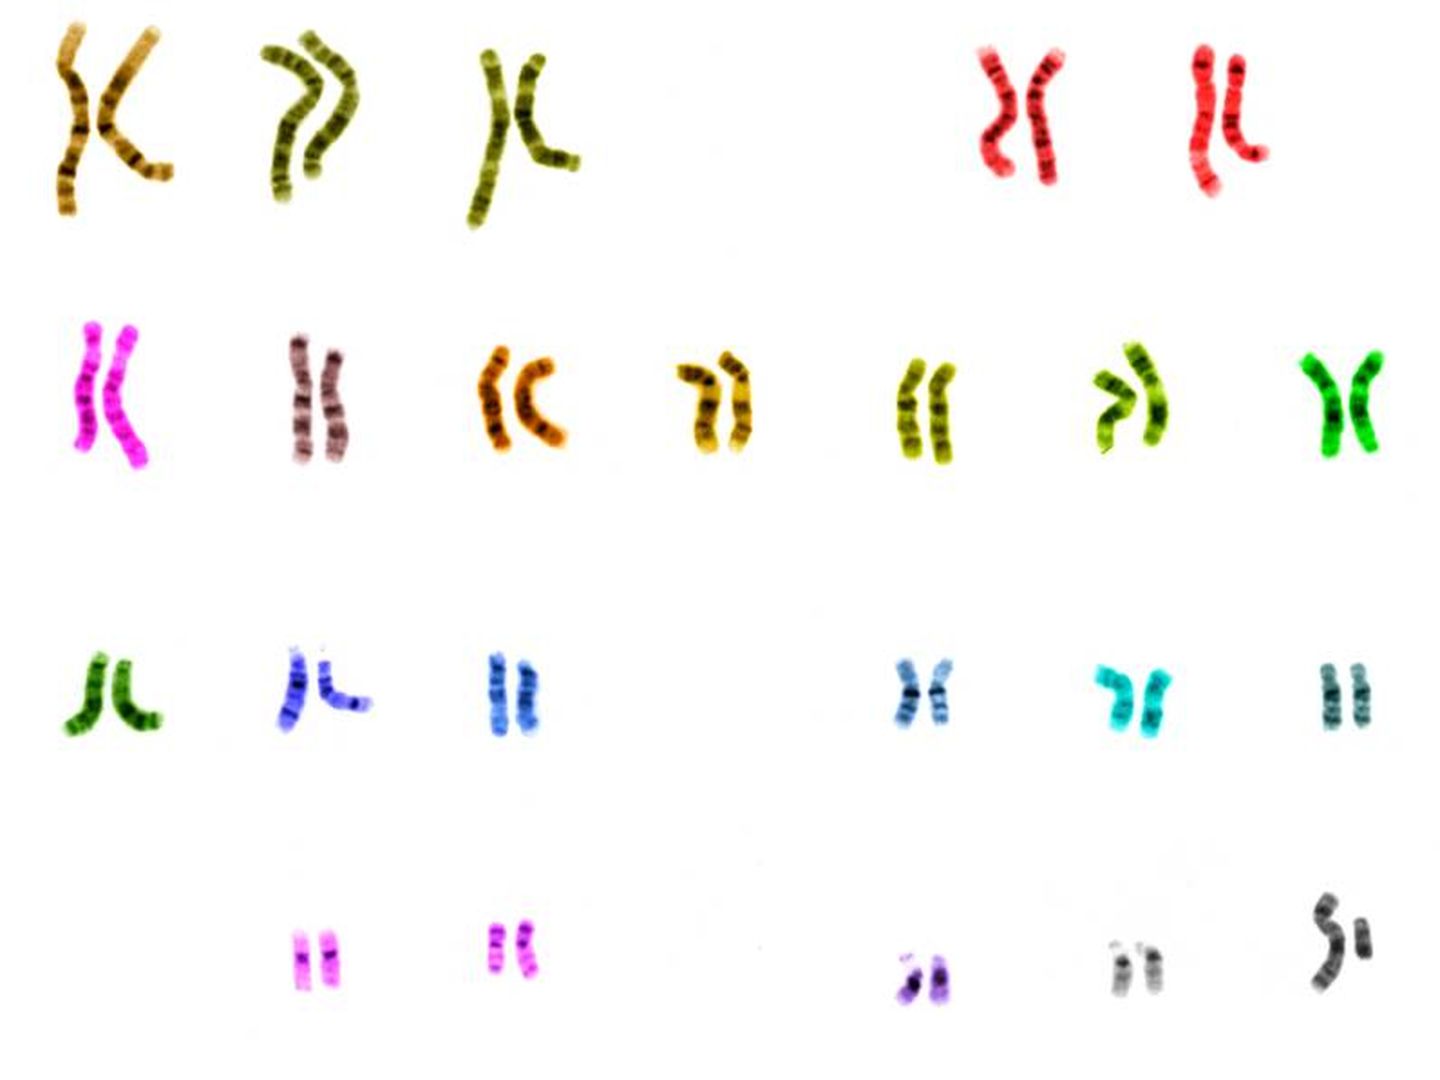 Hola, somos cromosomas.